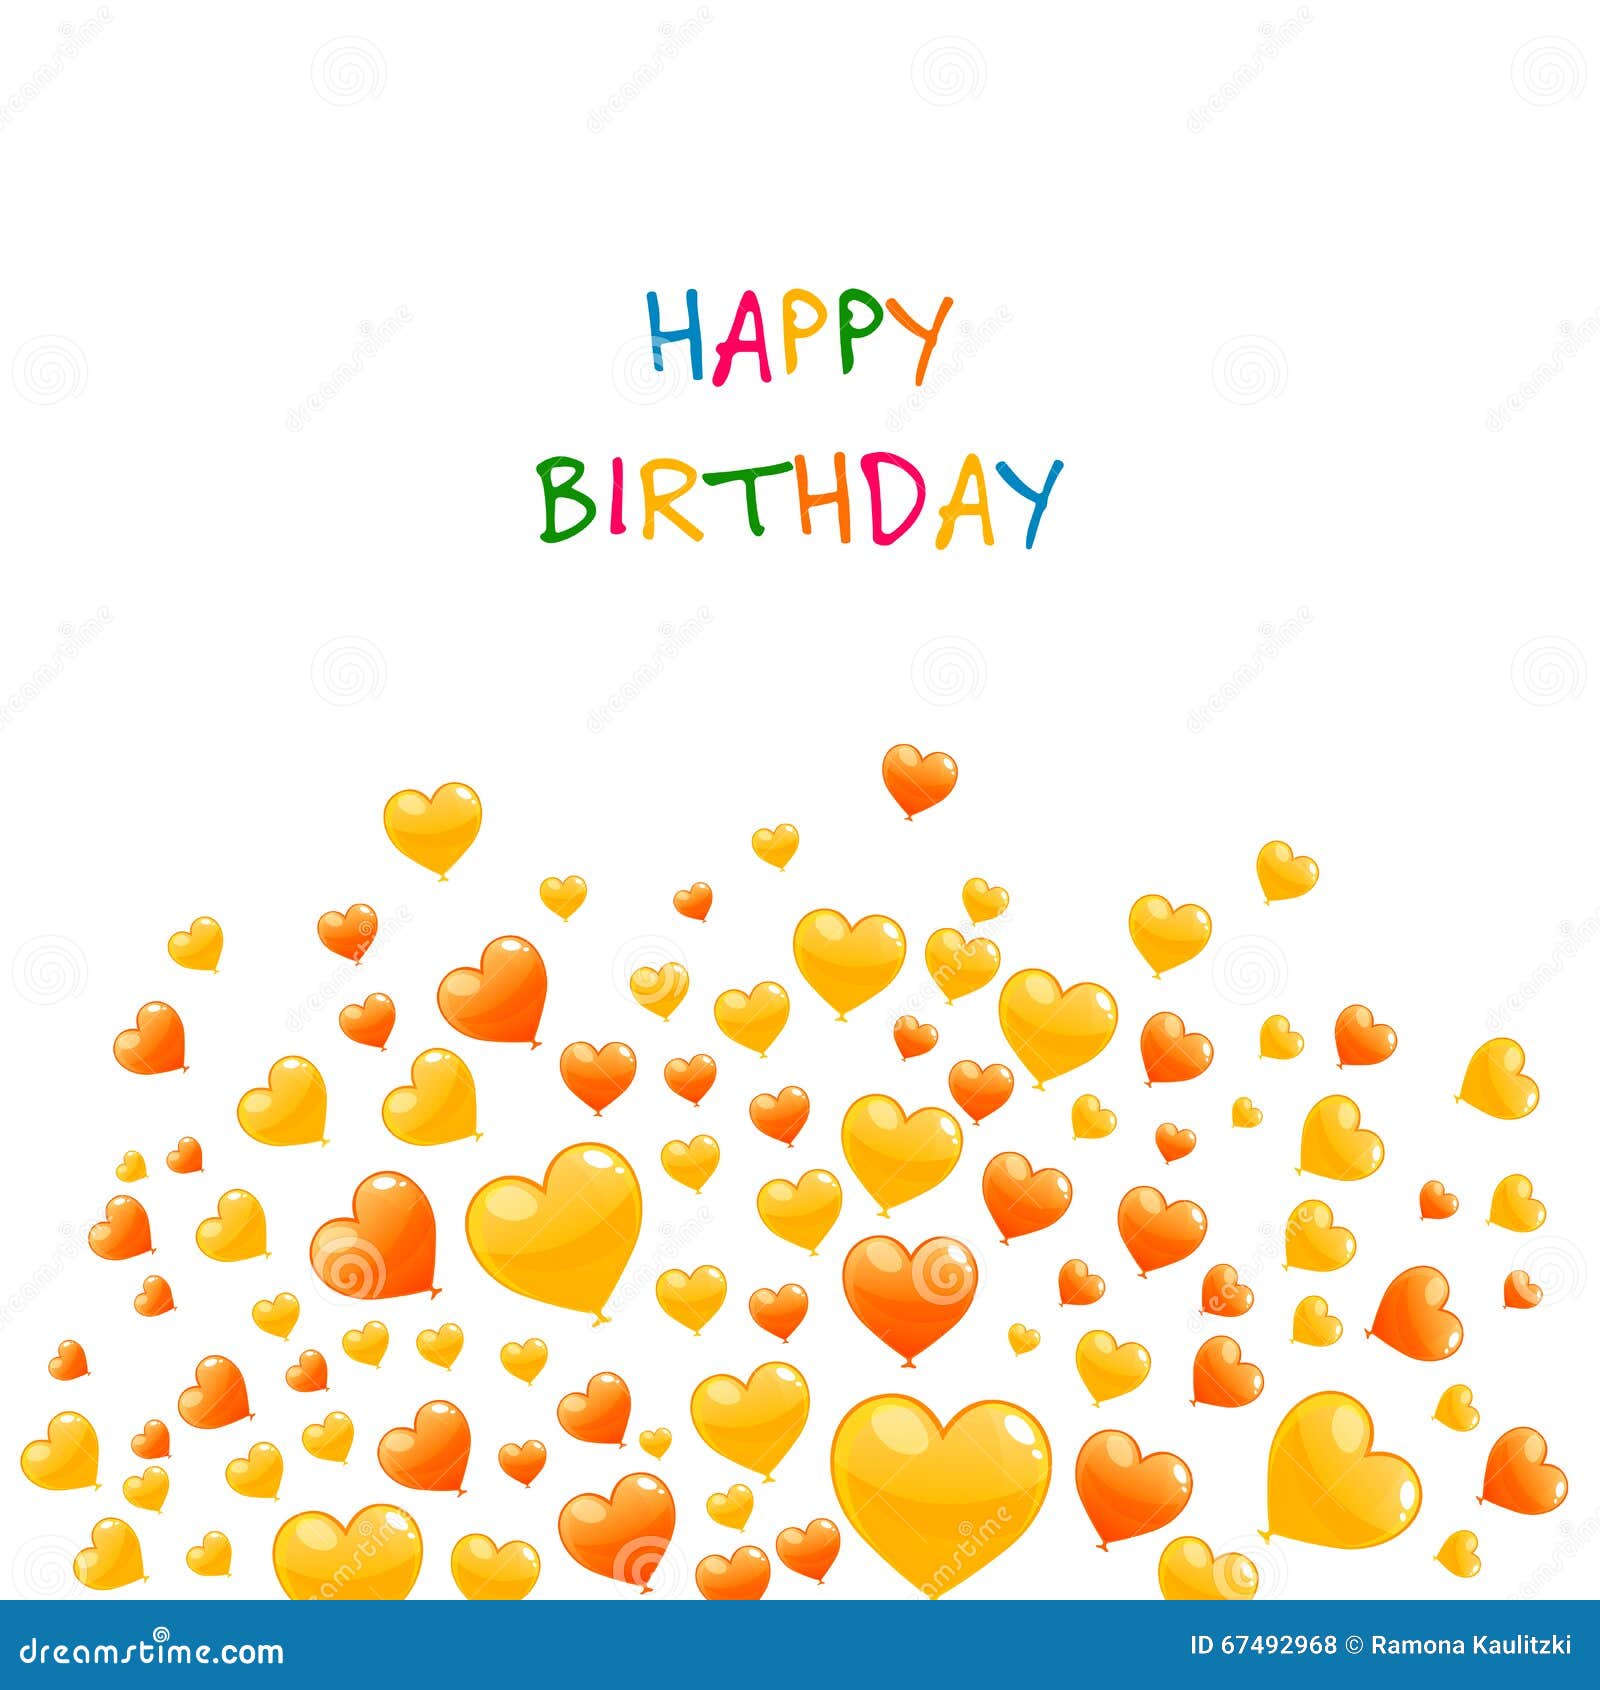 Happy Birthday Greeting Card Stock Illustration - Illustration of heart ...